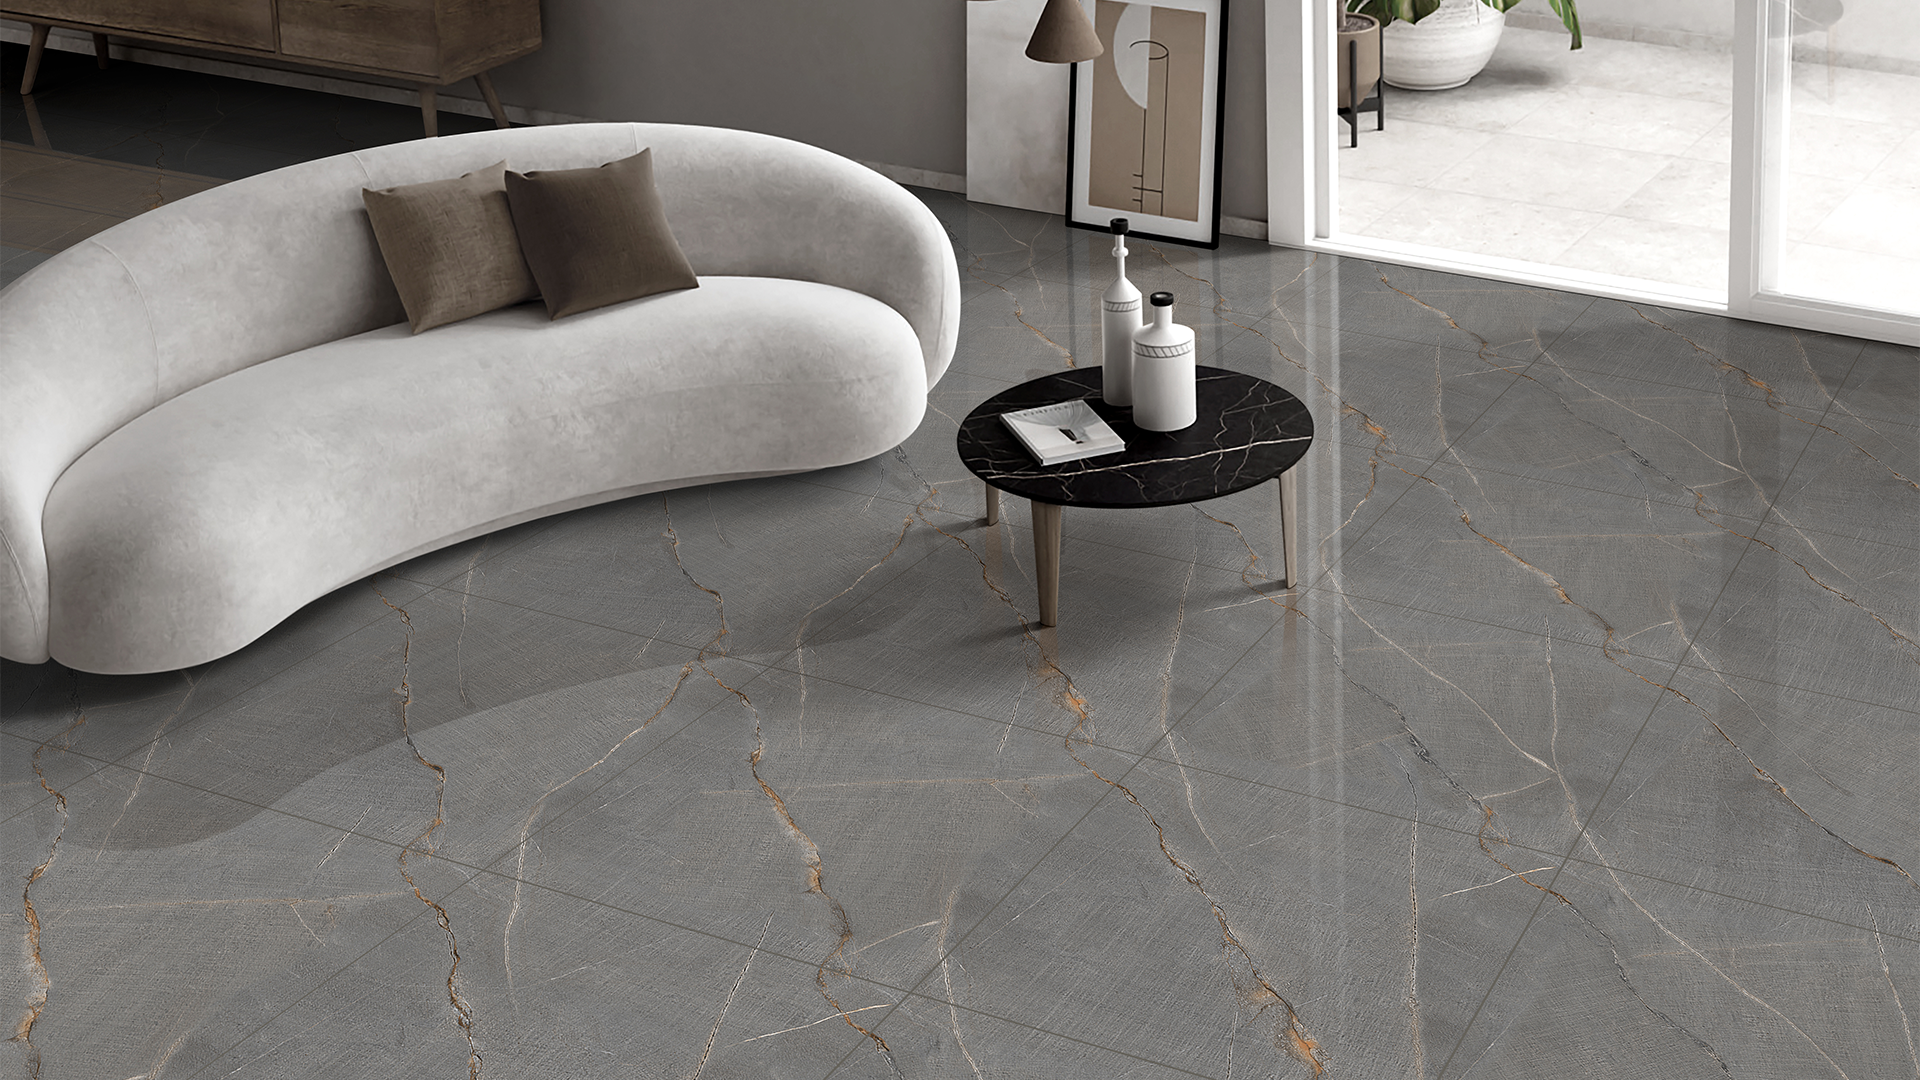 Stone floor tiles